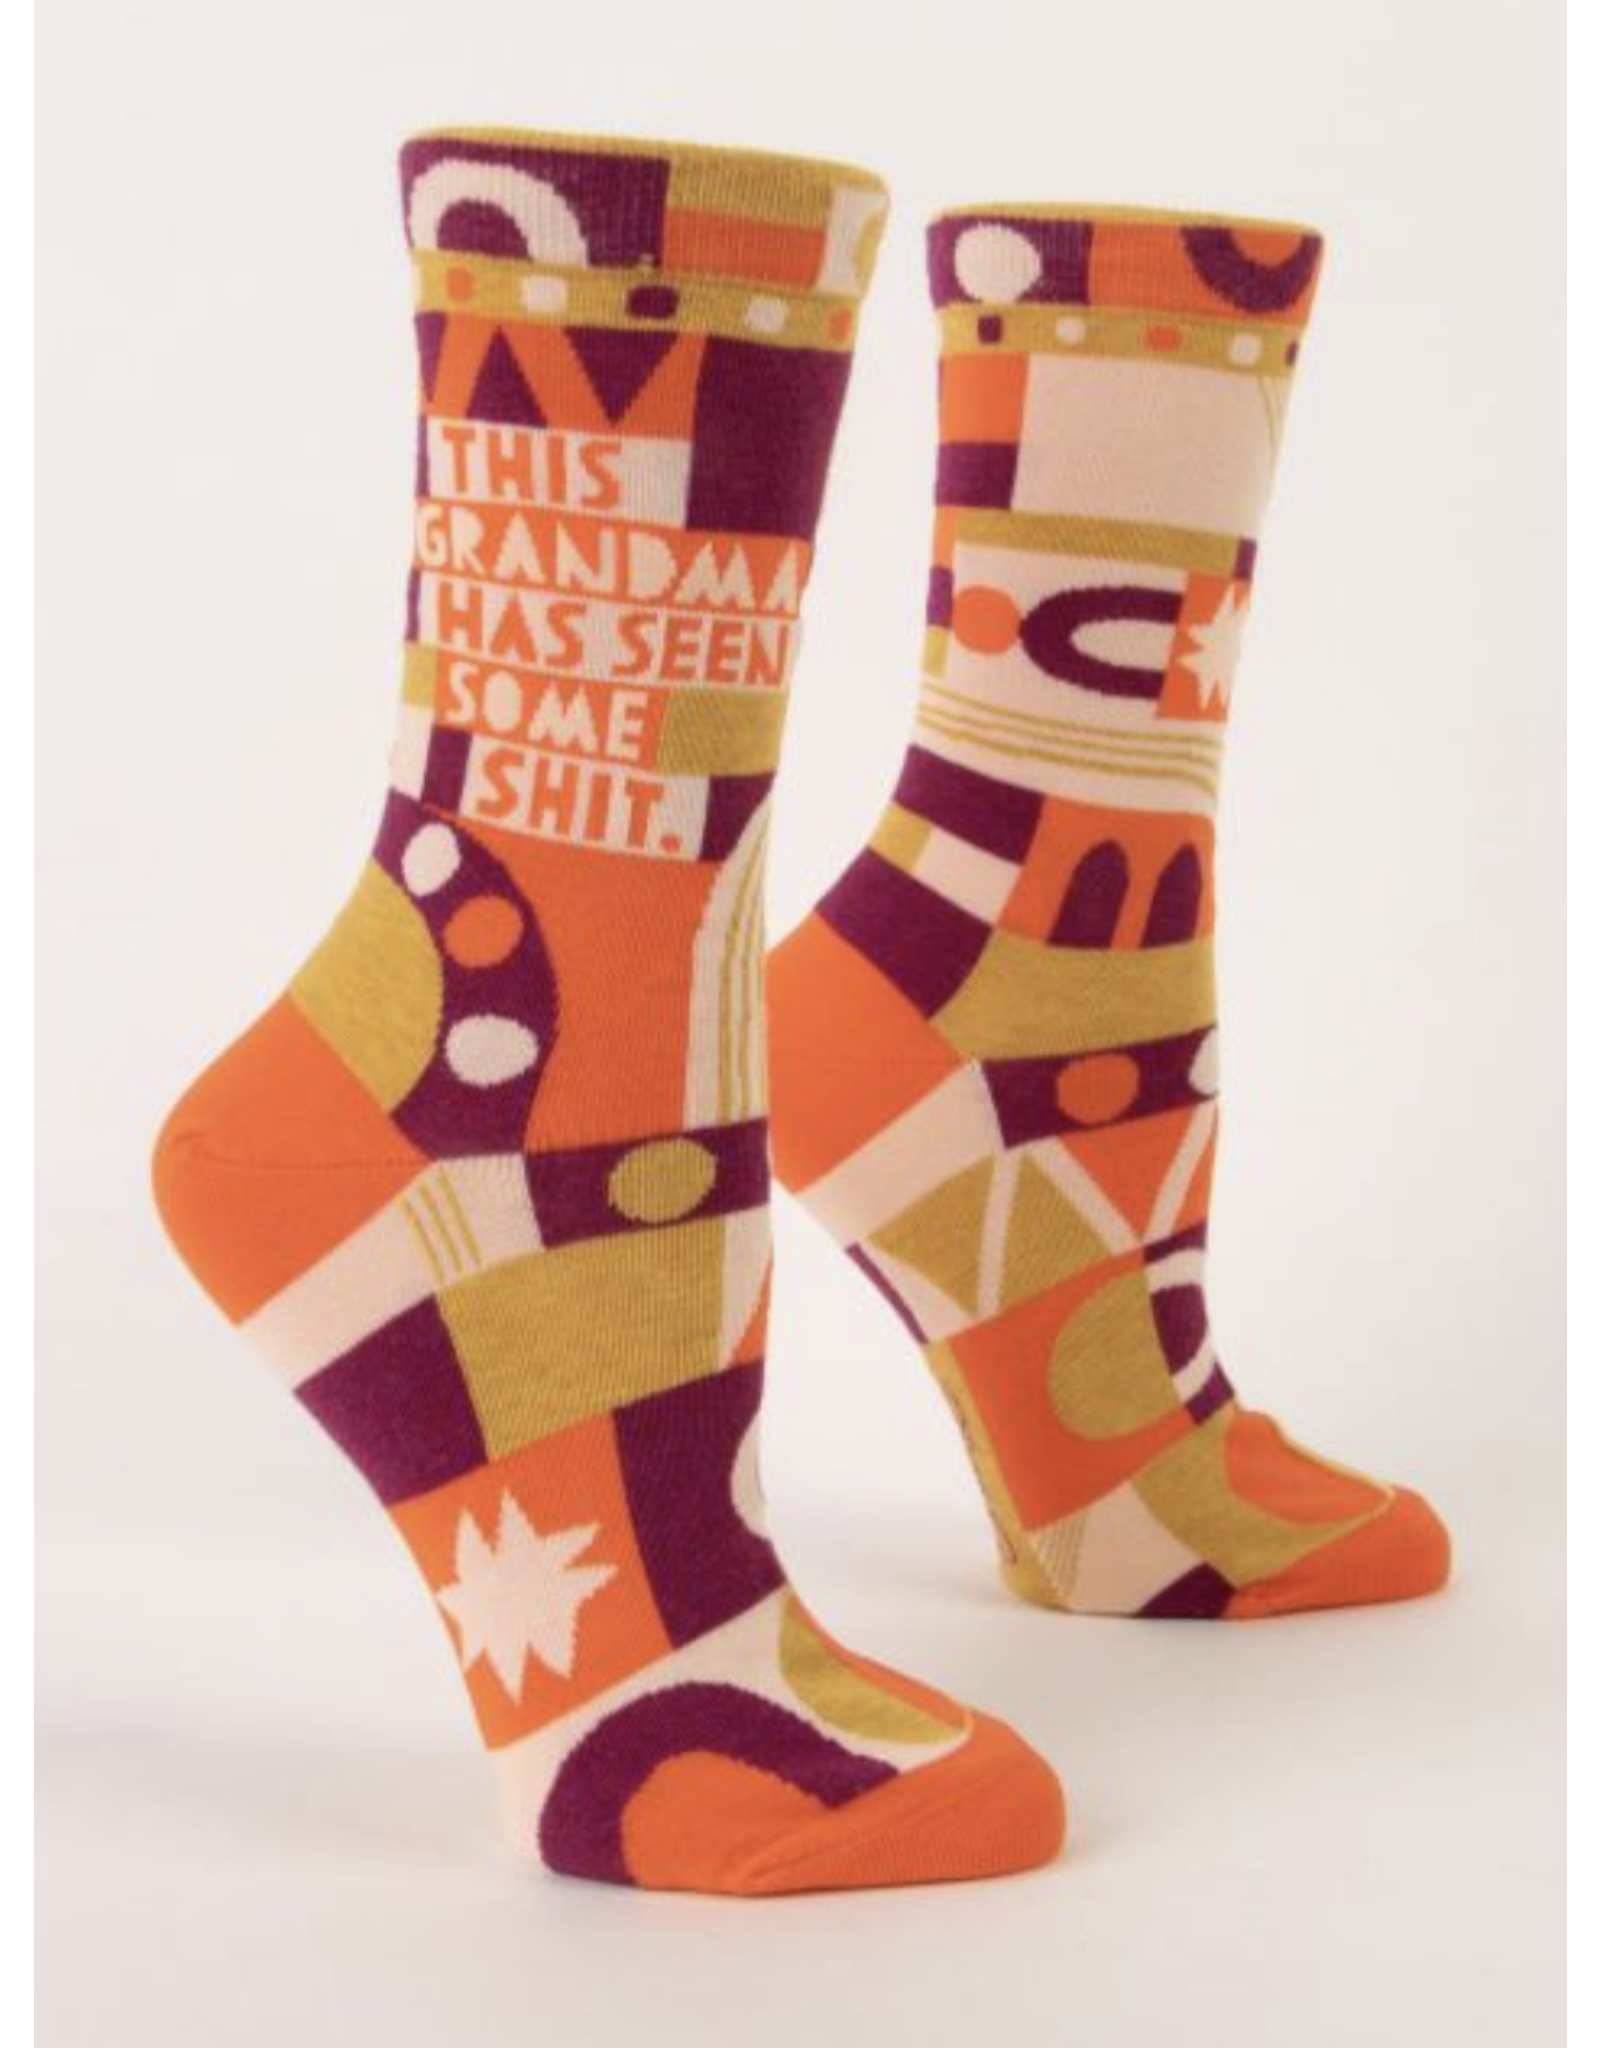 BQ Sassy Socks - Grandma's Seen Some Sh*t